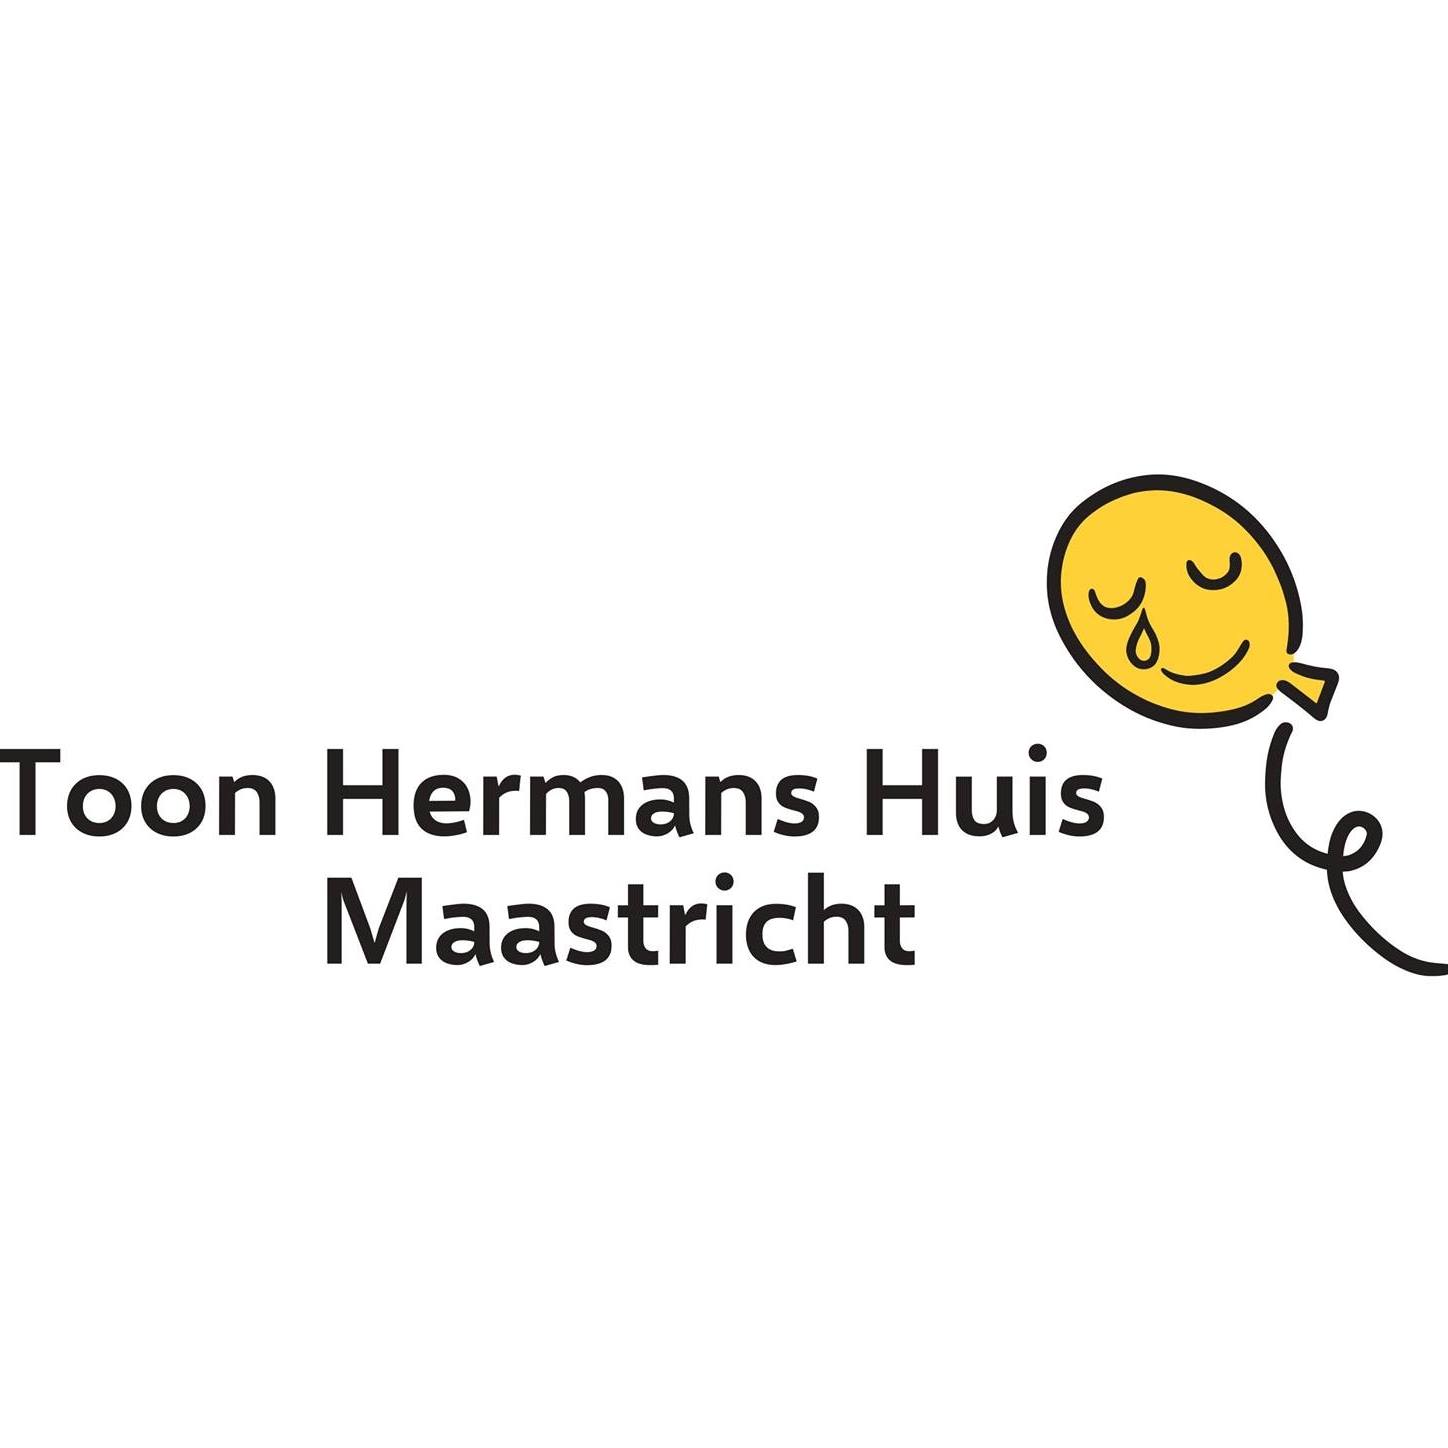 Toon Hermans Huis Maastricht